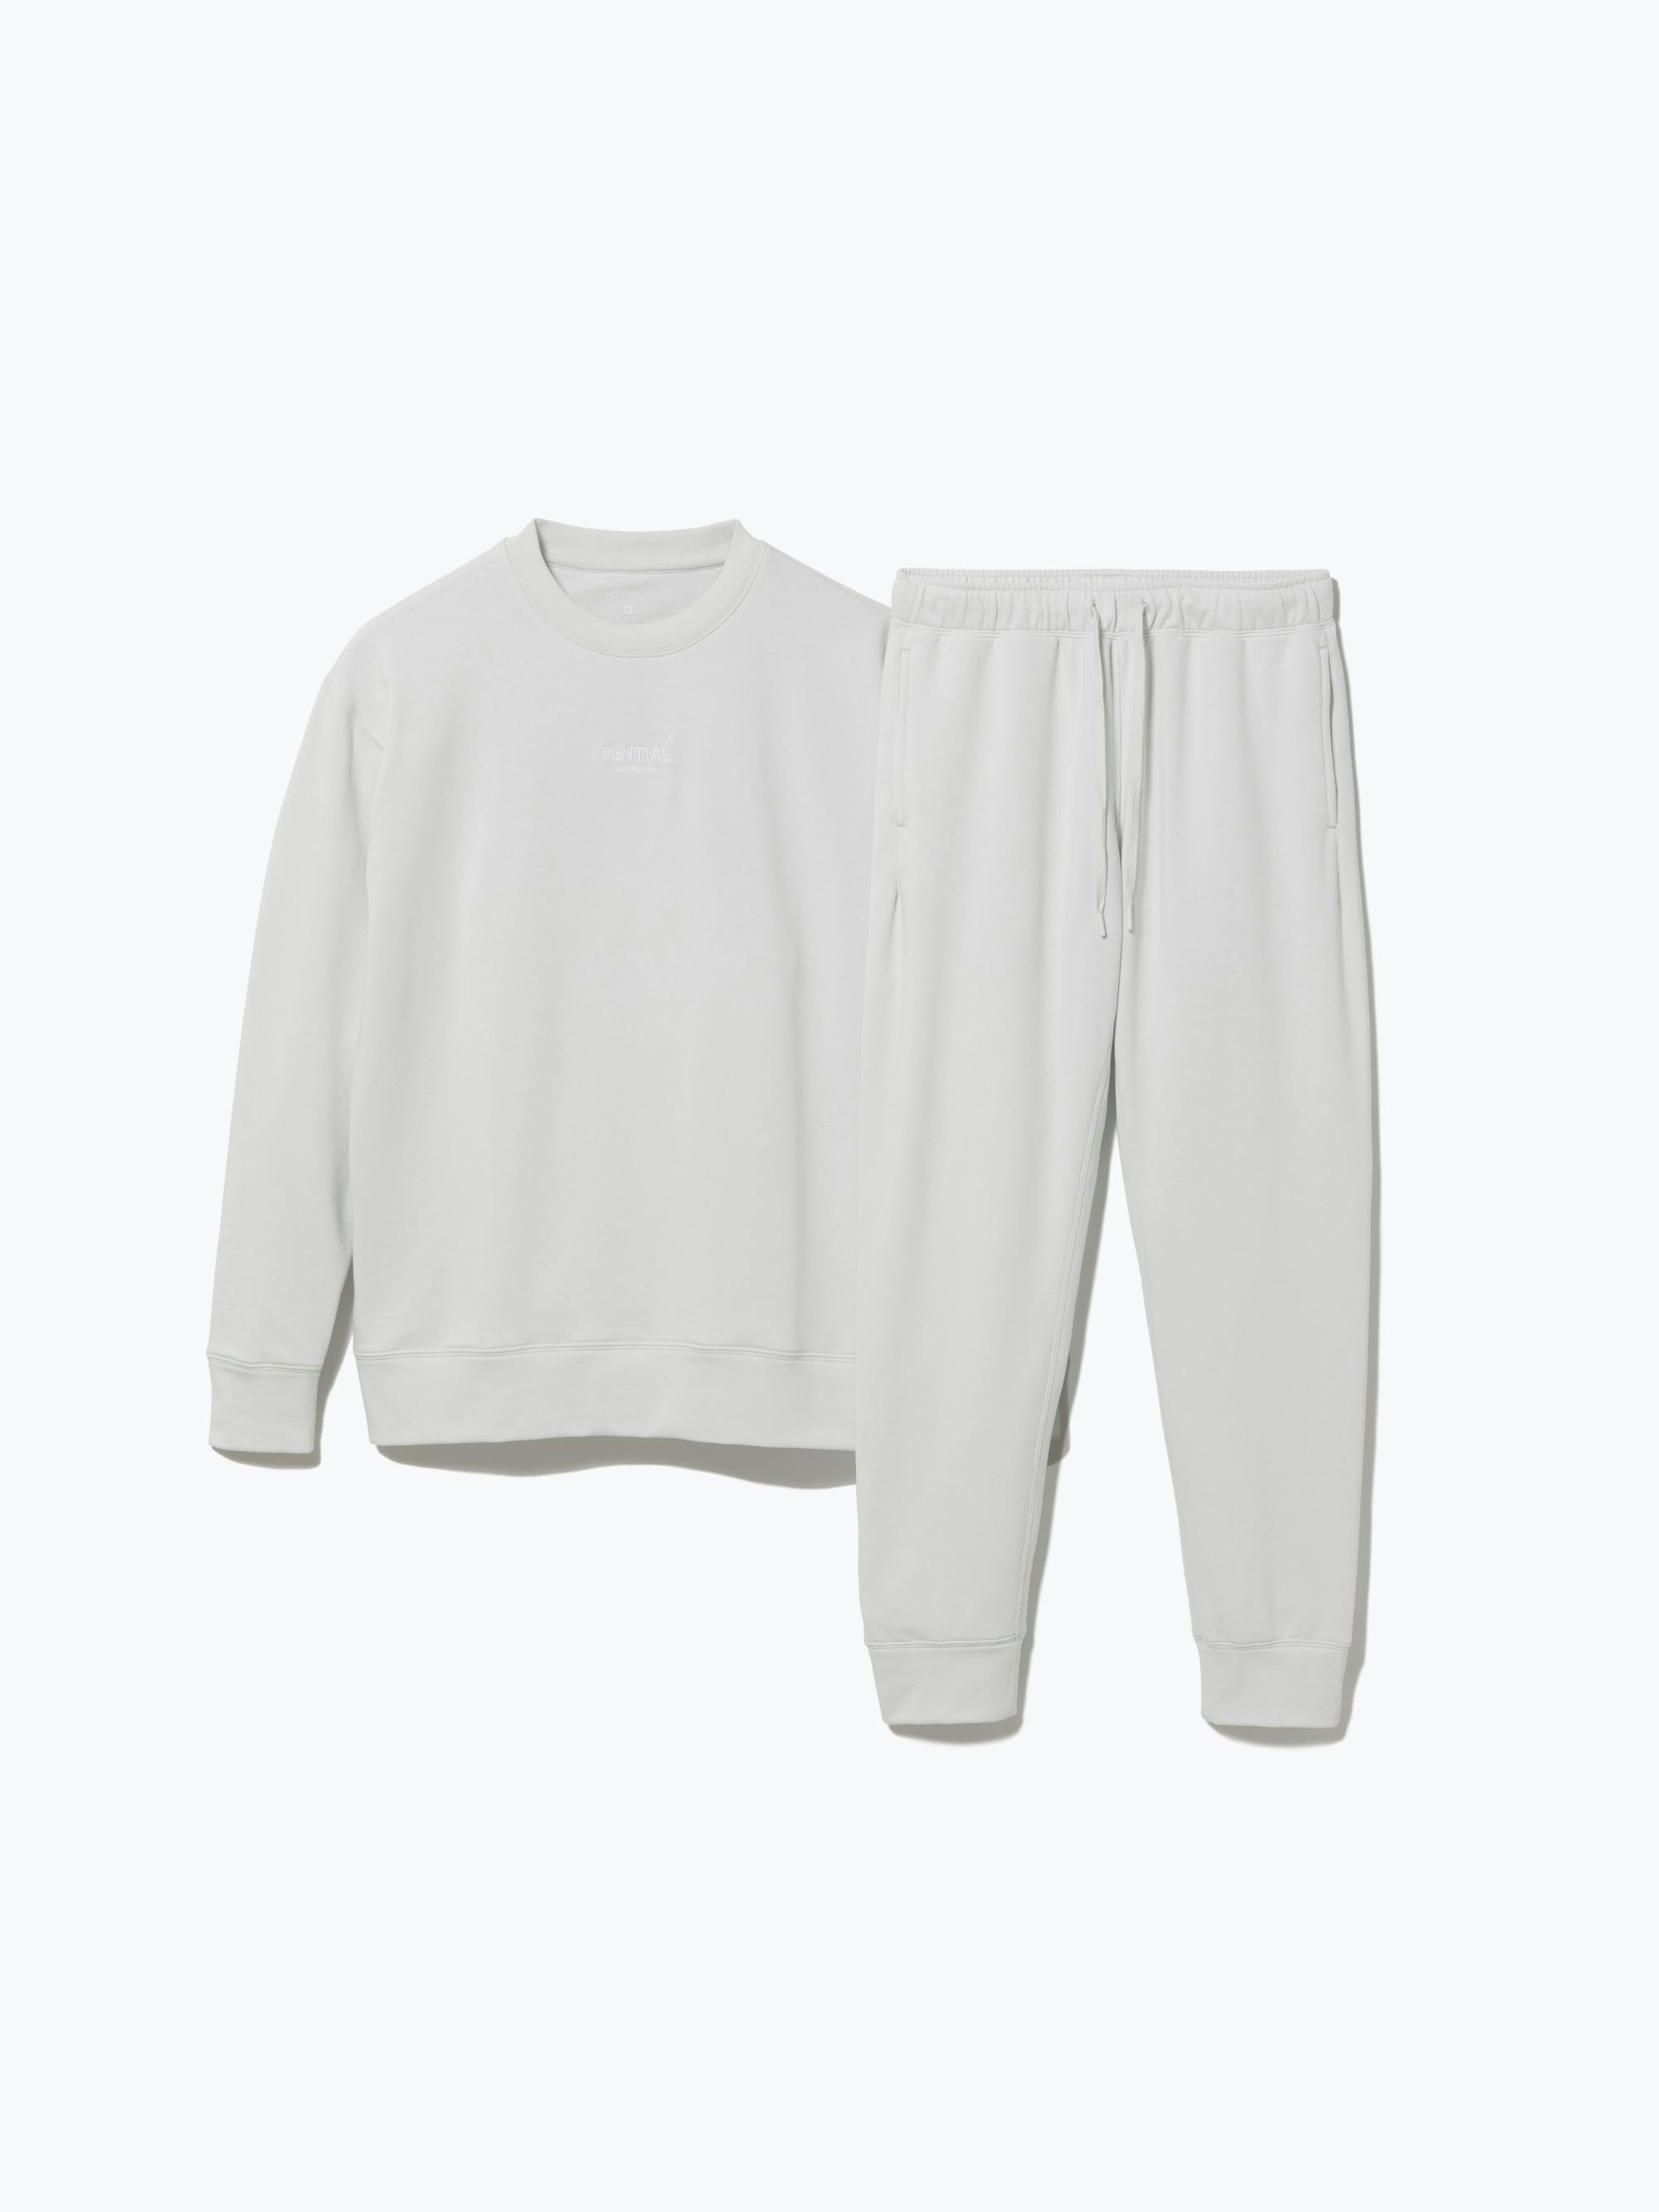 BAKUNE Pajamas Sweat 上下セット（長袖・ロングパンツ） | TENTIAL 